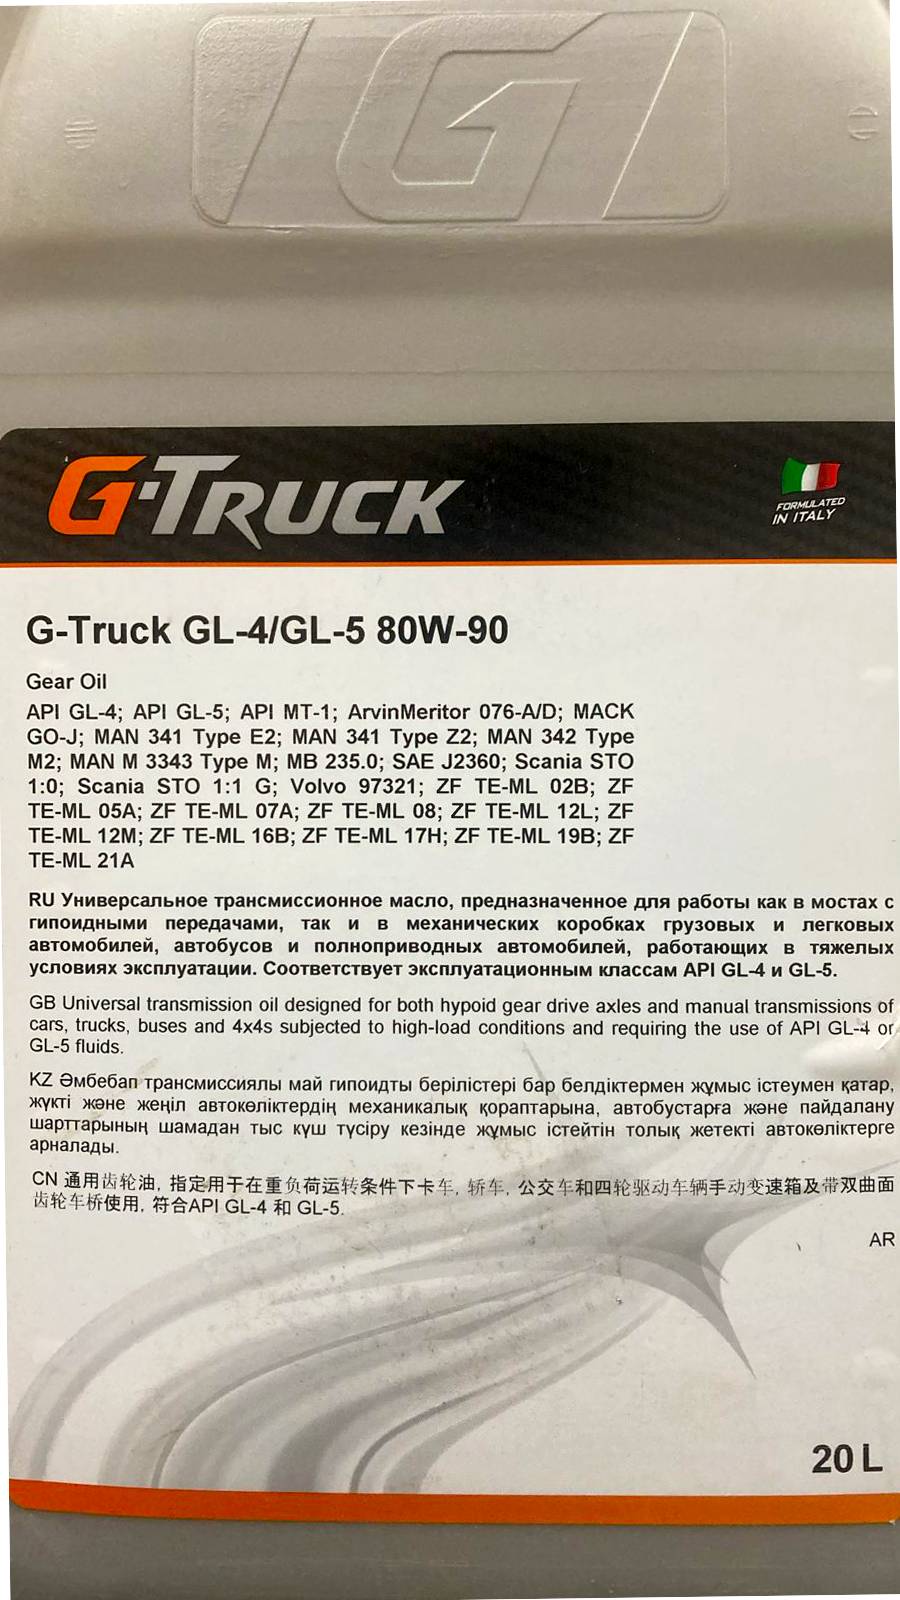 АВТОМАСЛА Масло трансмиссионное G-Truck GL-4/GL-5 80W90 на розлив